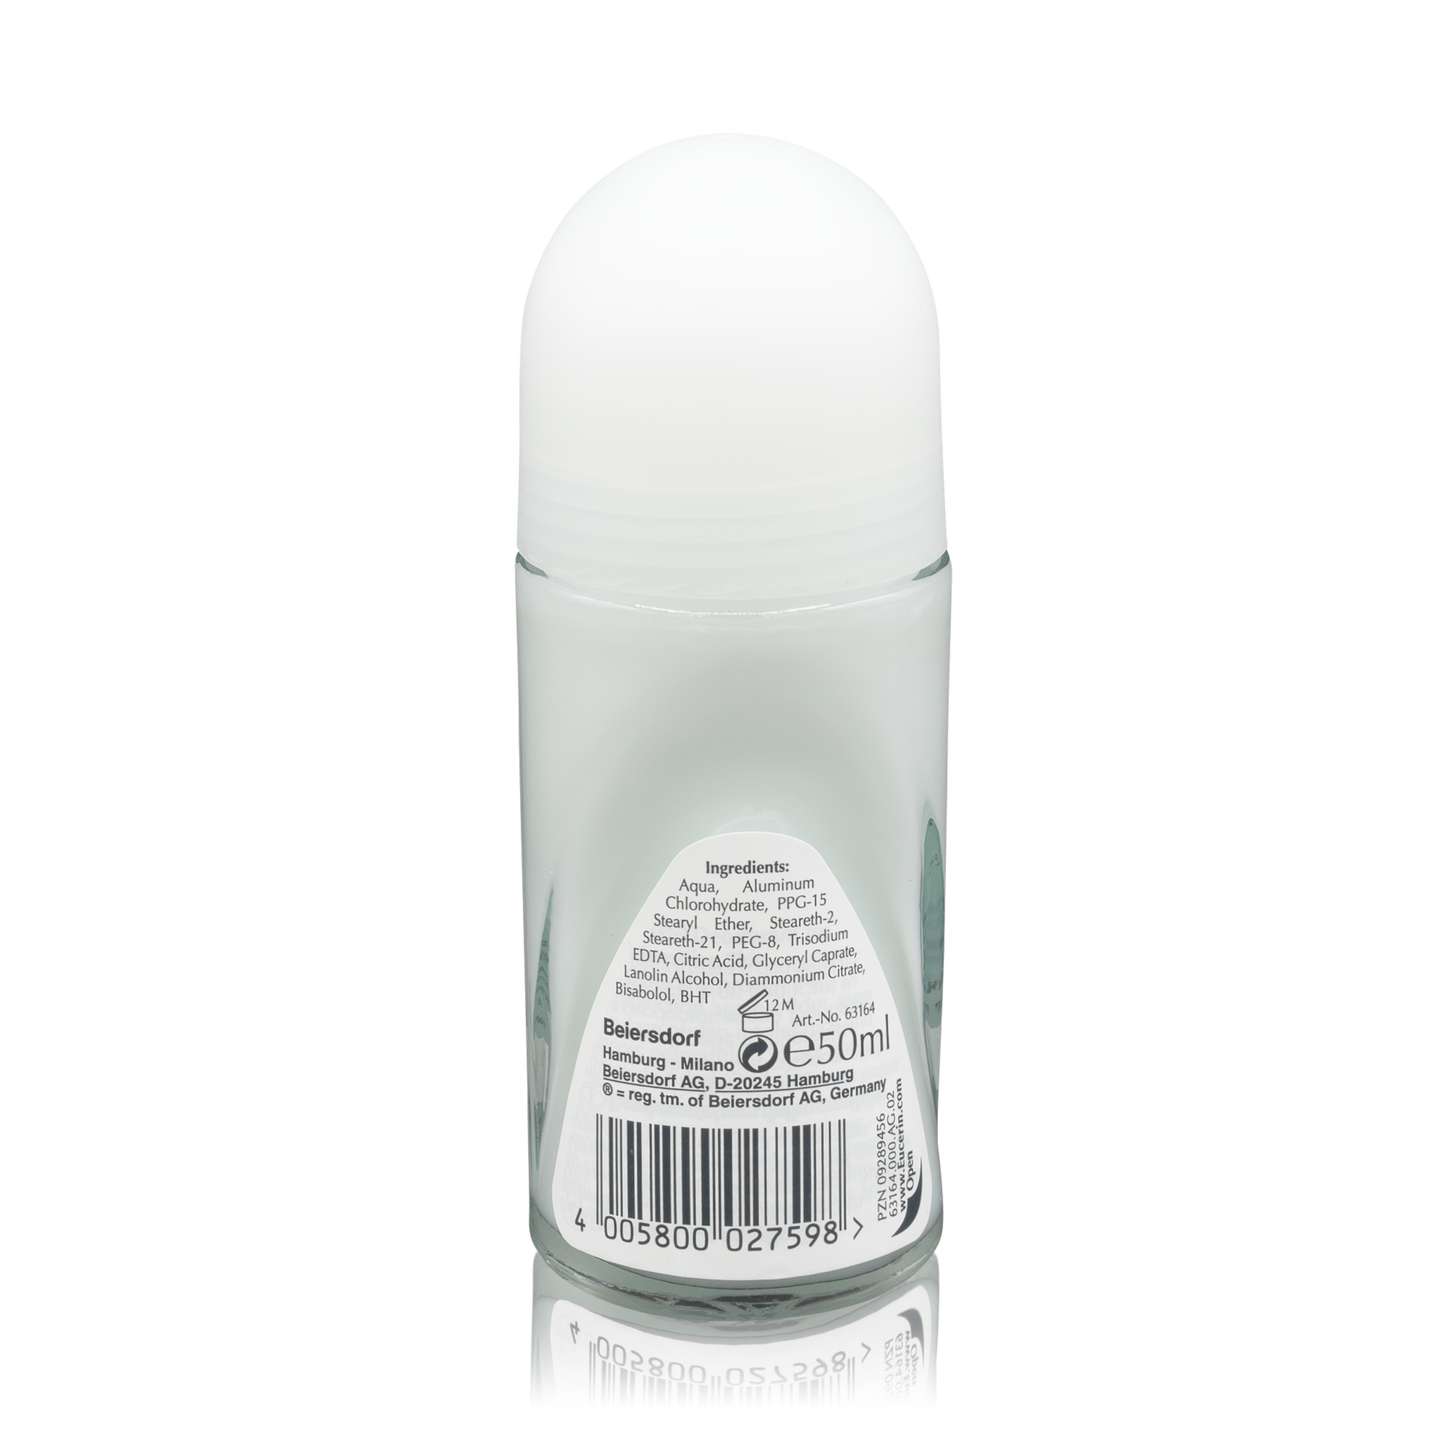 Eucerin Deodorant 24h bei empfindlicher Haut - Roll-On (50ml) - PZN: 9289456 - RoTe Place